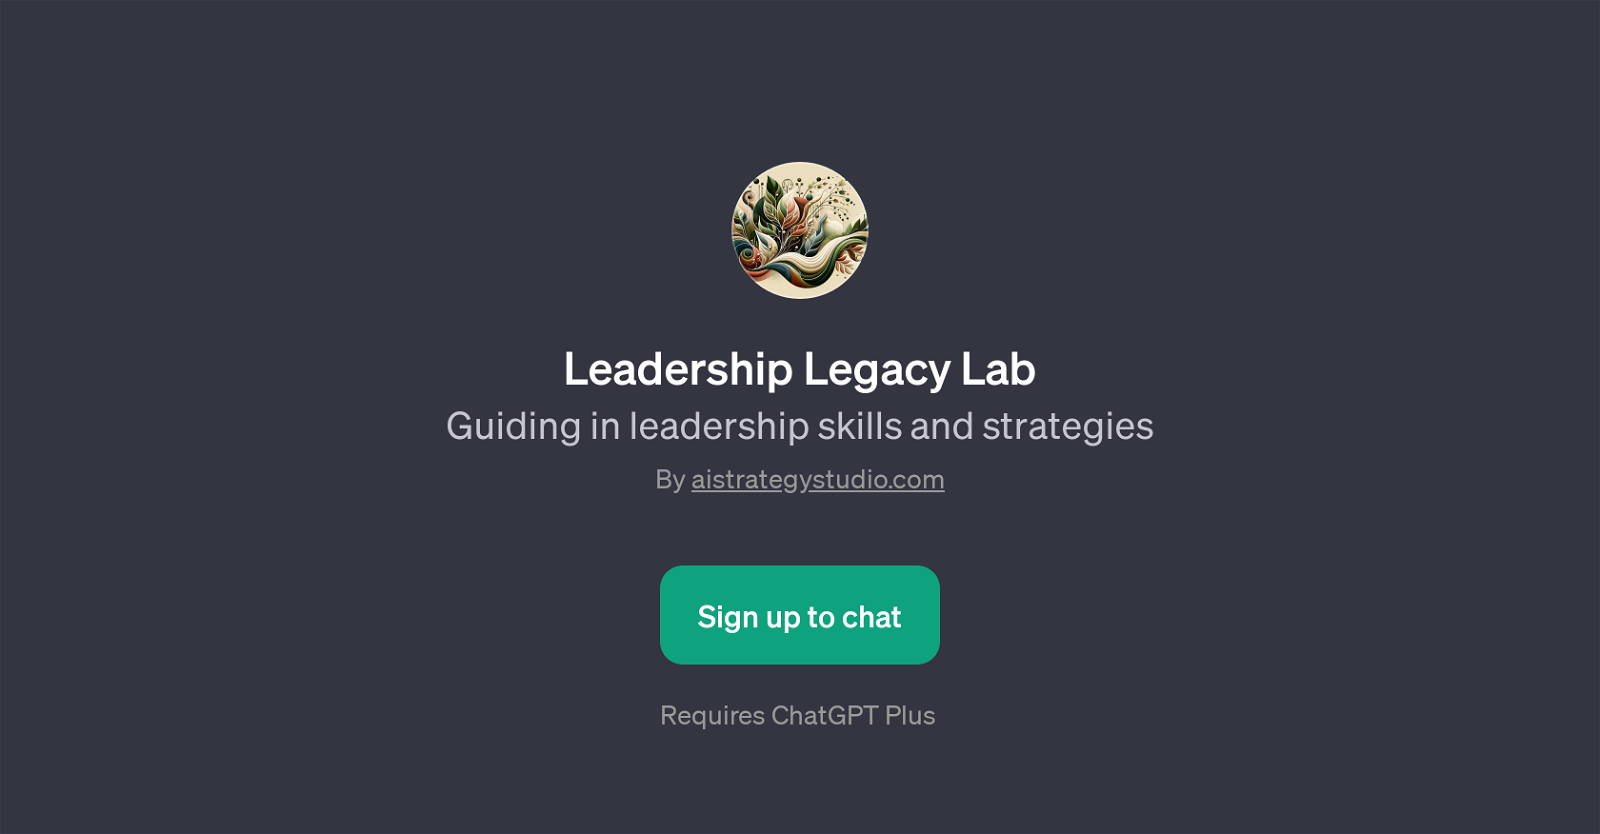 Leadership Legacy Lab website